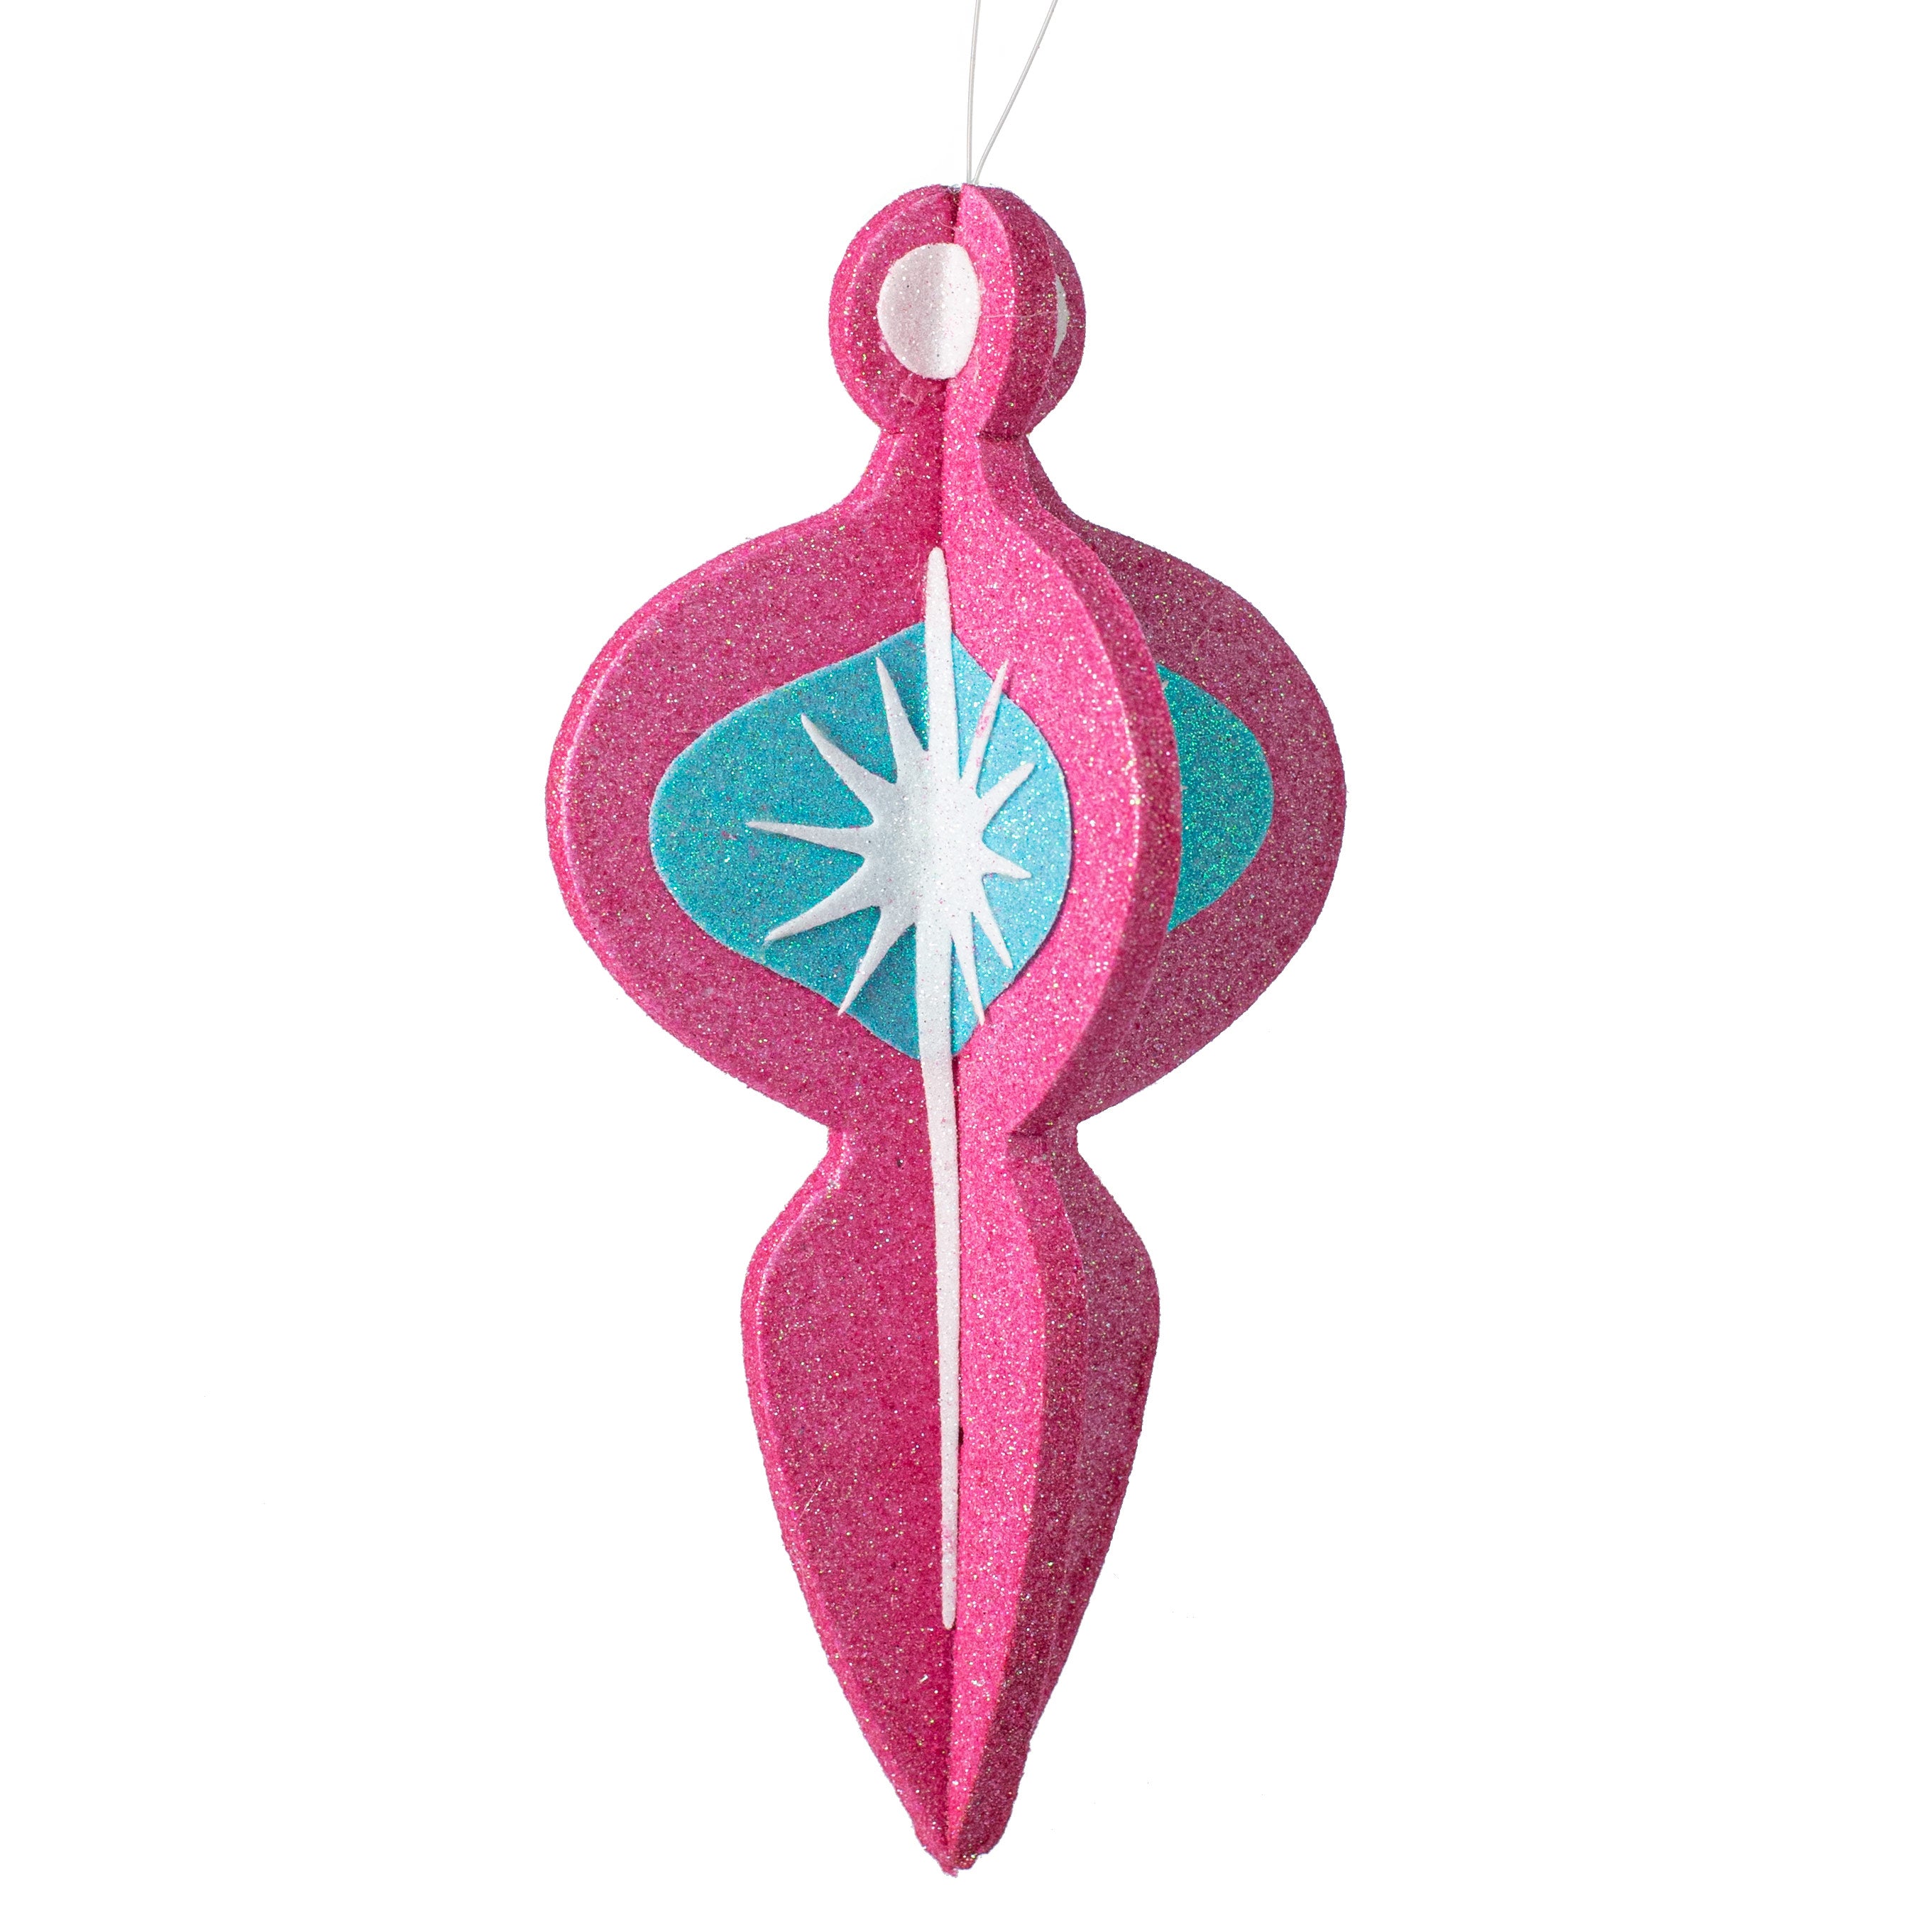 10" Whimsical Lantern Ornament: Fuchsia